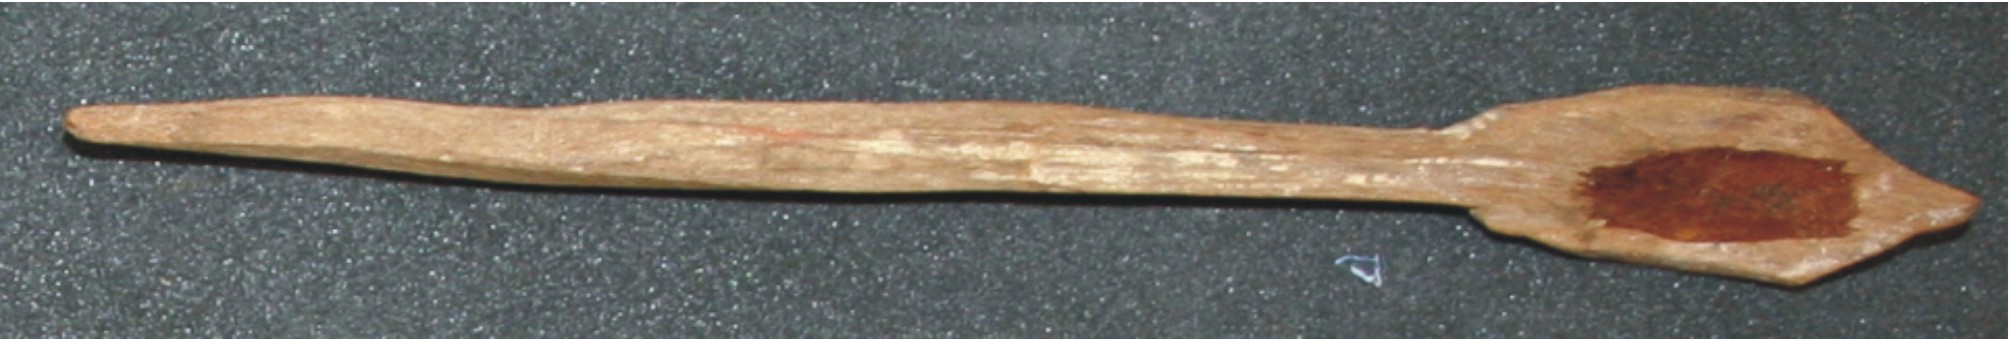 Image for: Model oar or rudder